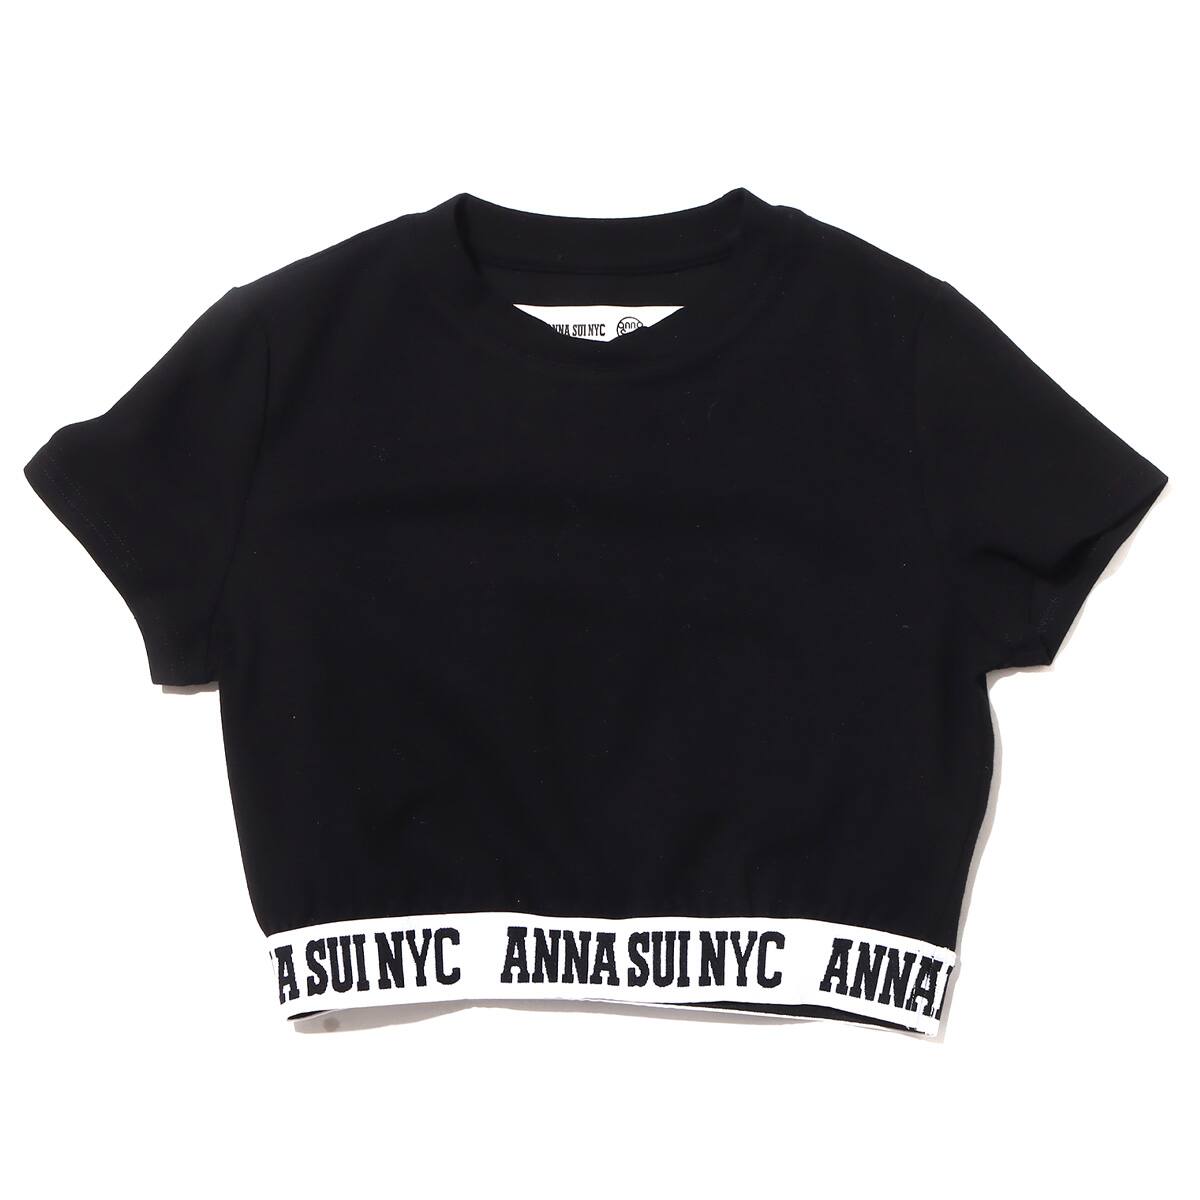 ANNA SUI NYC ロゴテープ チビTシャツ BLACK 22HO-I_photo_large